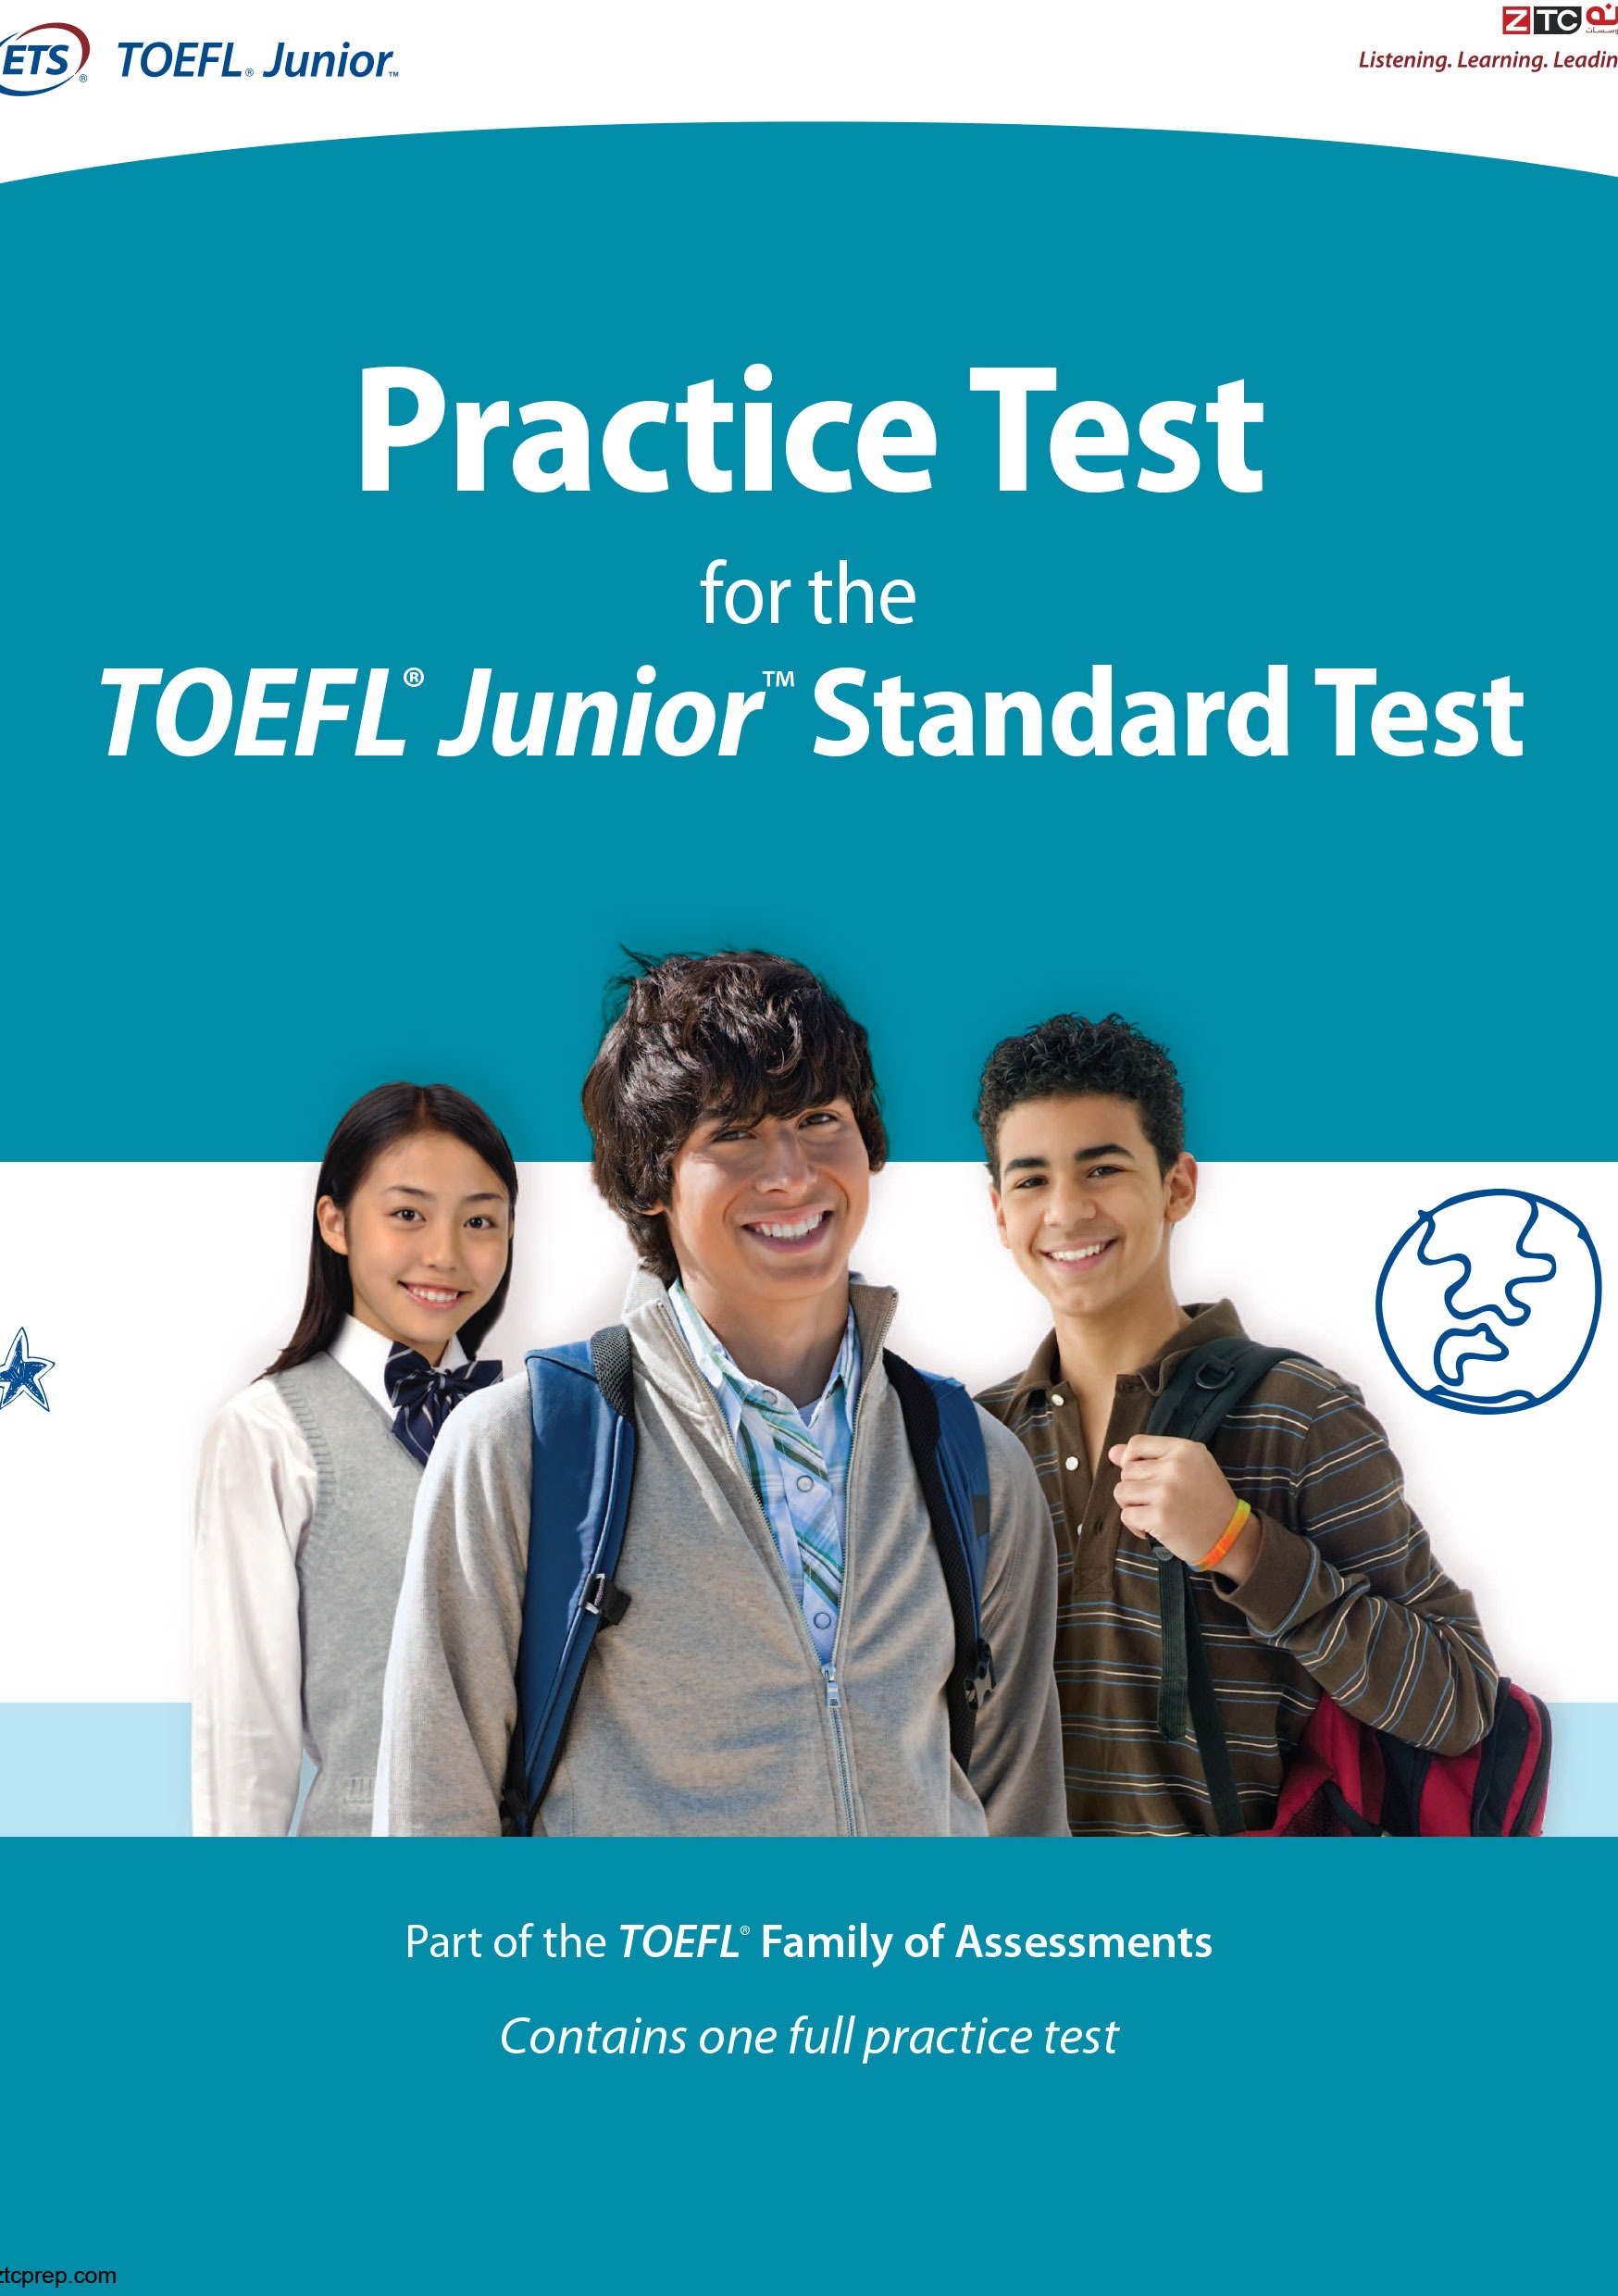 Preactice Tests For the TOEFL Junior Standard Test